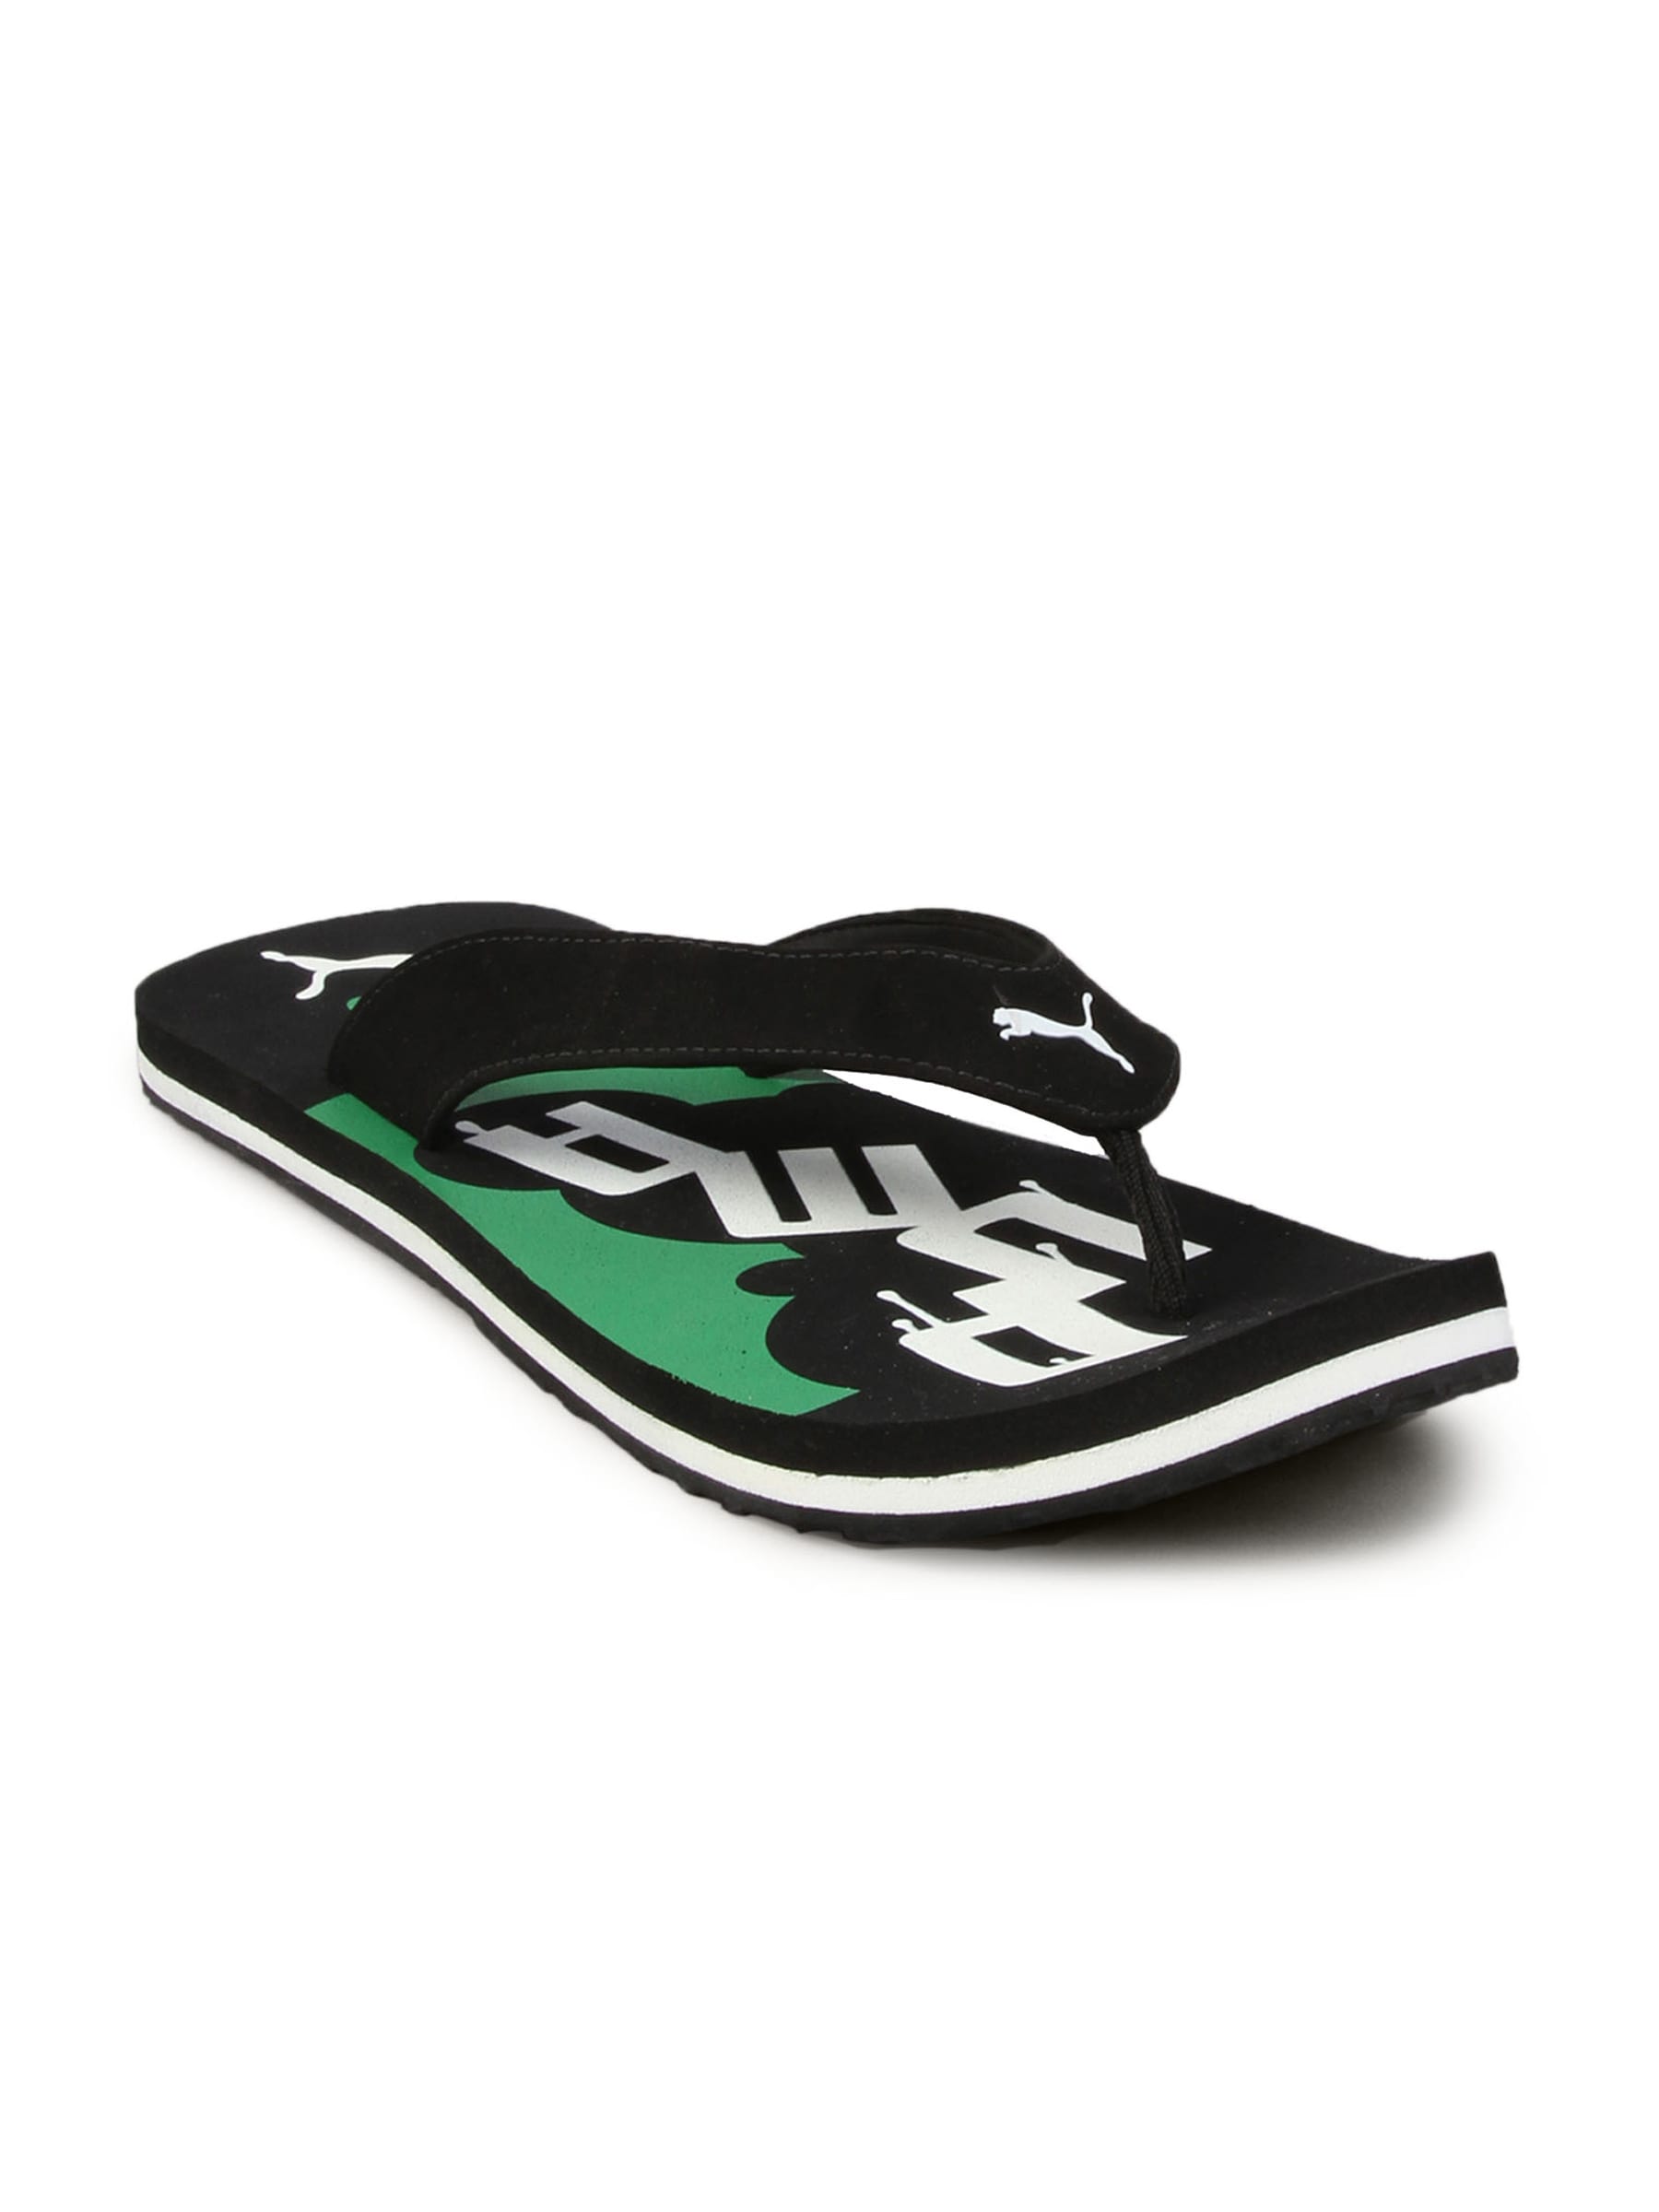 Puma Unisex Splash Black Green Flip Flops